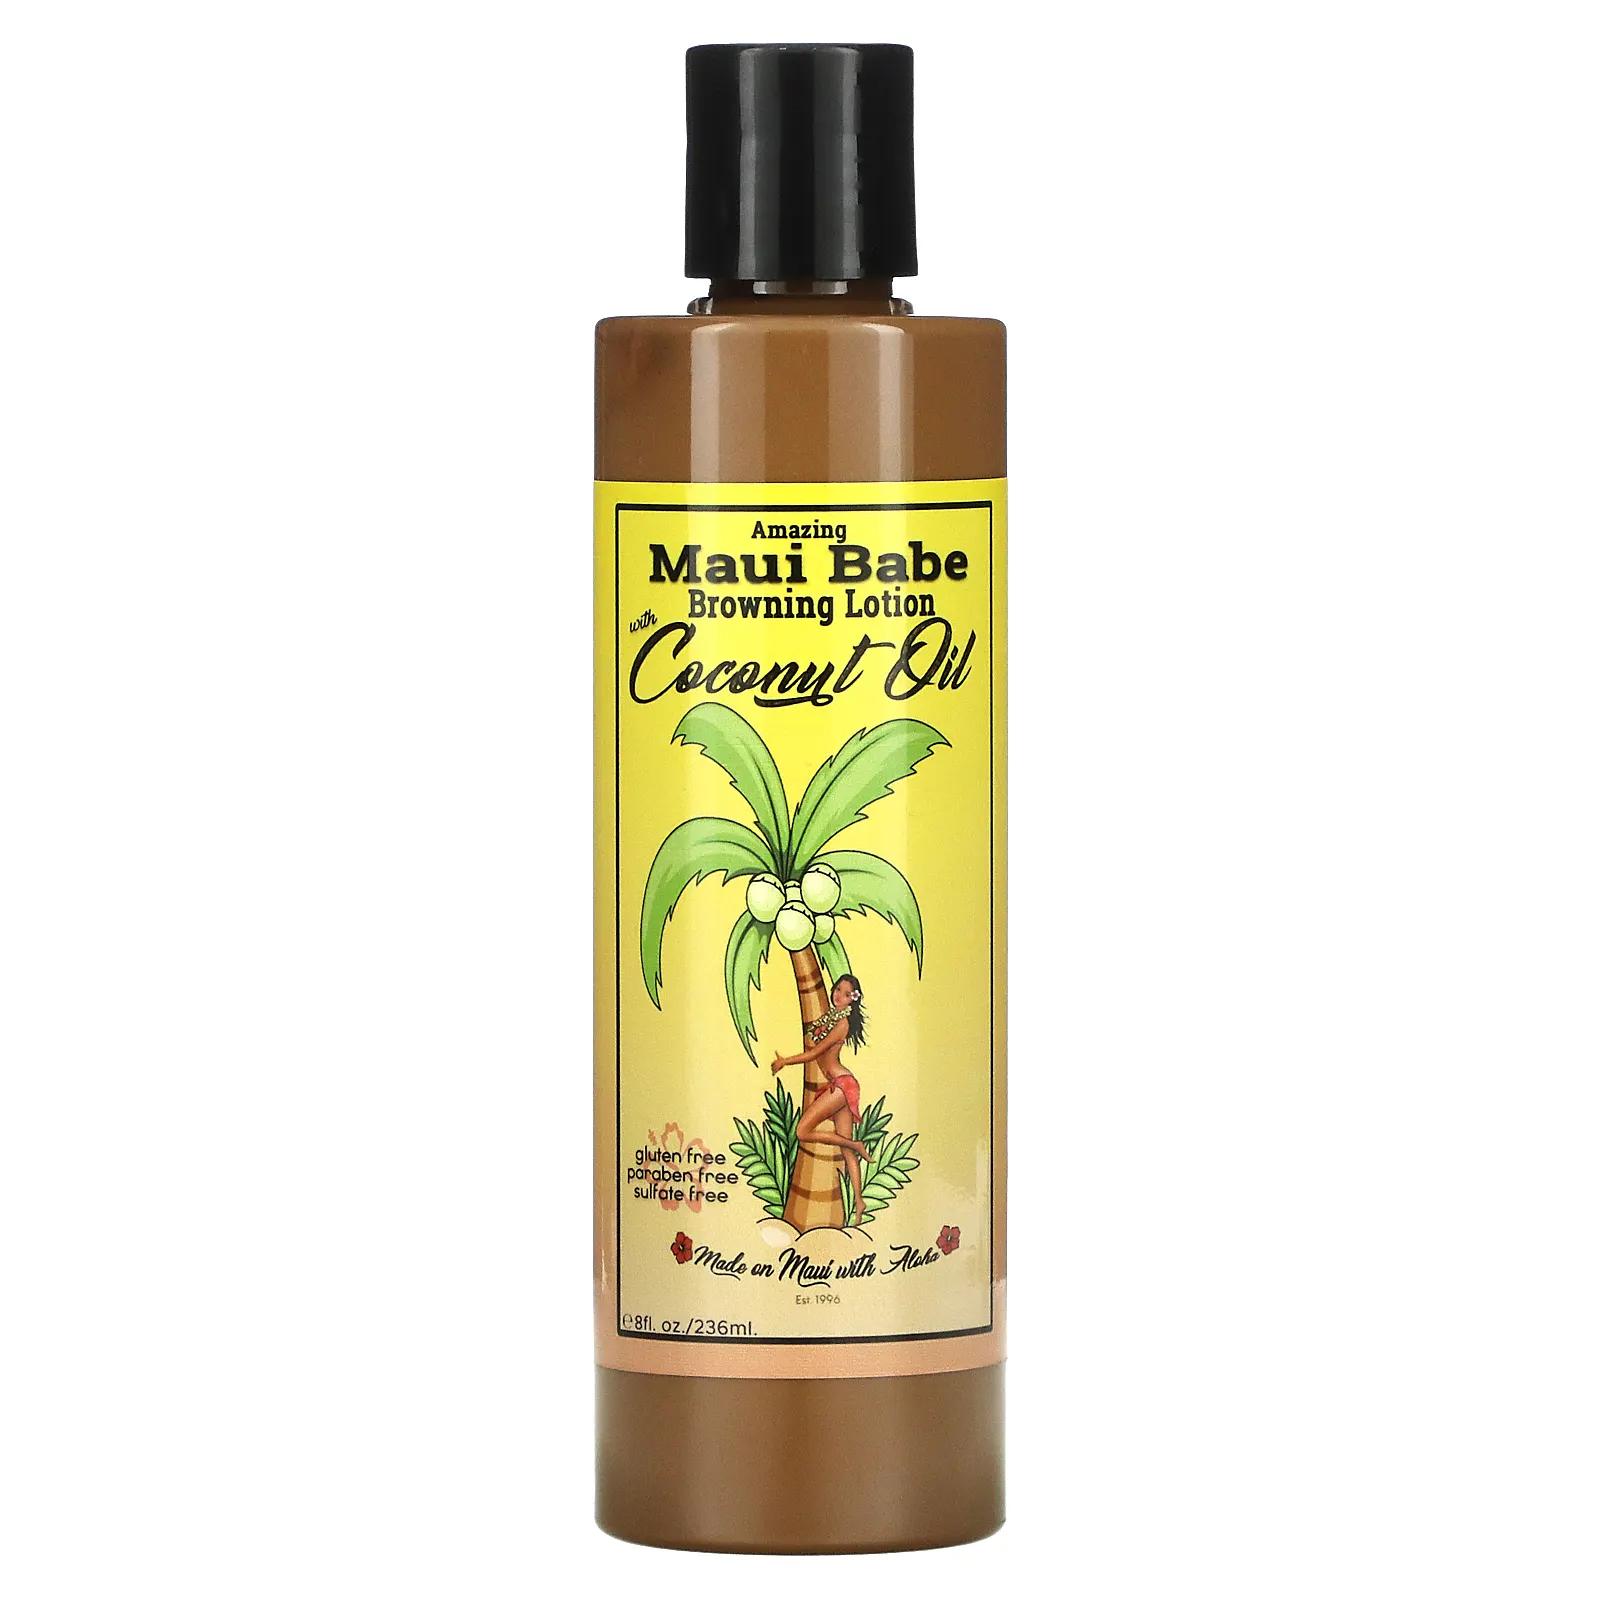 Maui Babe Amazing Browning Lotion with Coconut Oil 8 fl oz (236 ml) maui babe кофейный скраб 240 мл